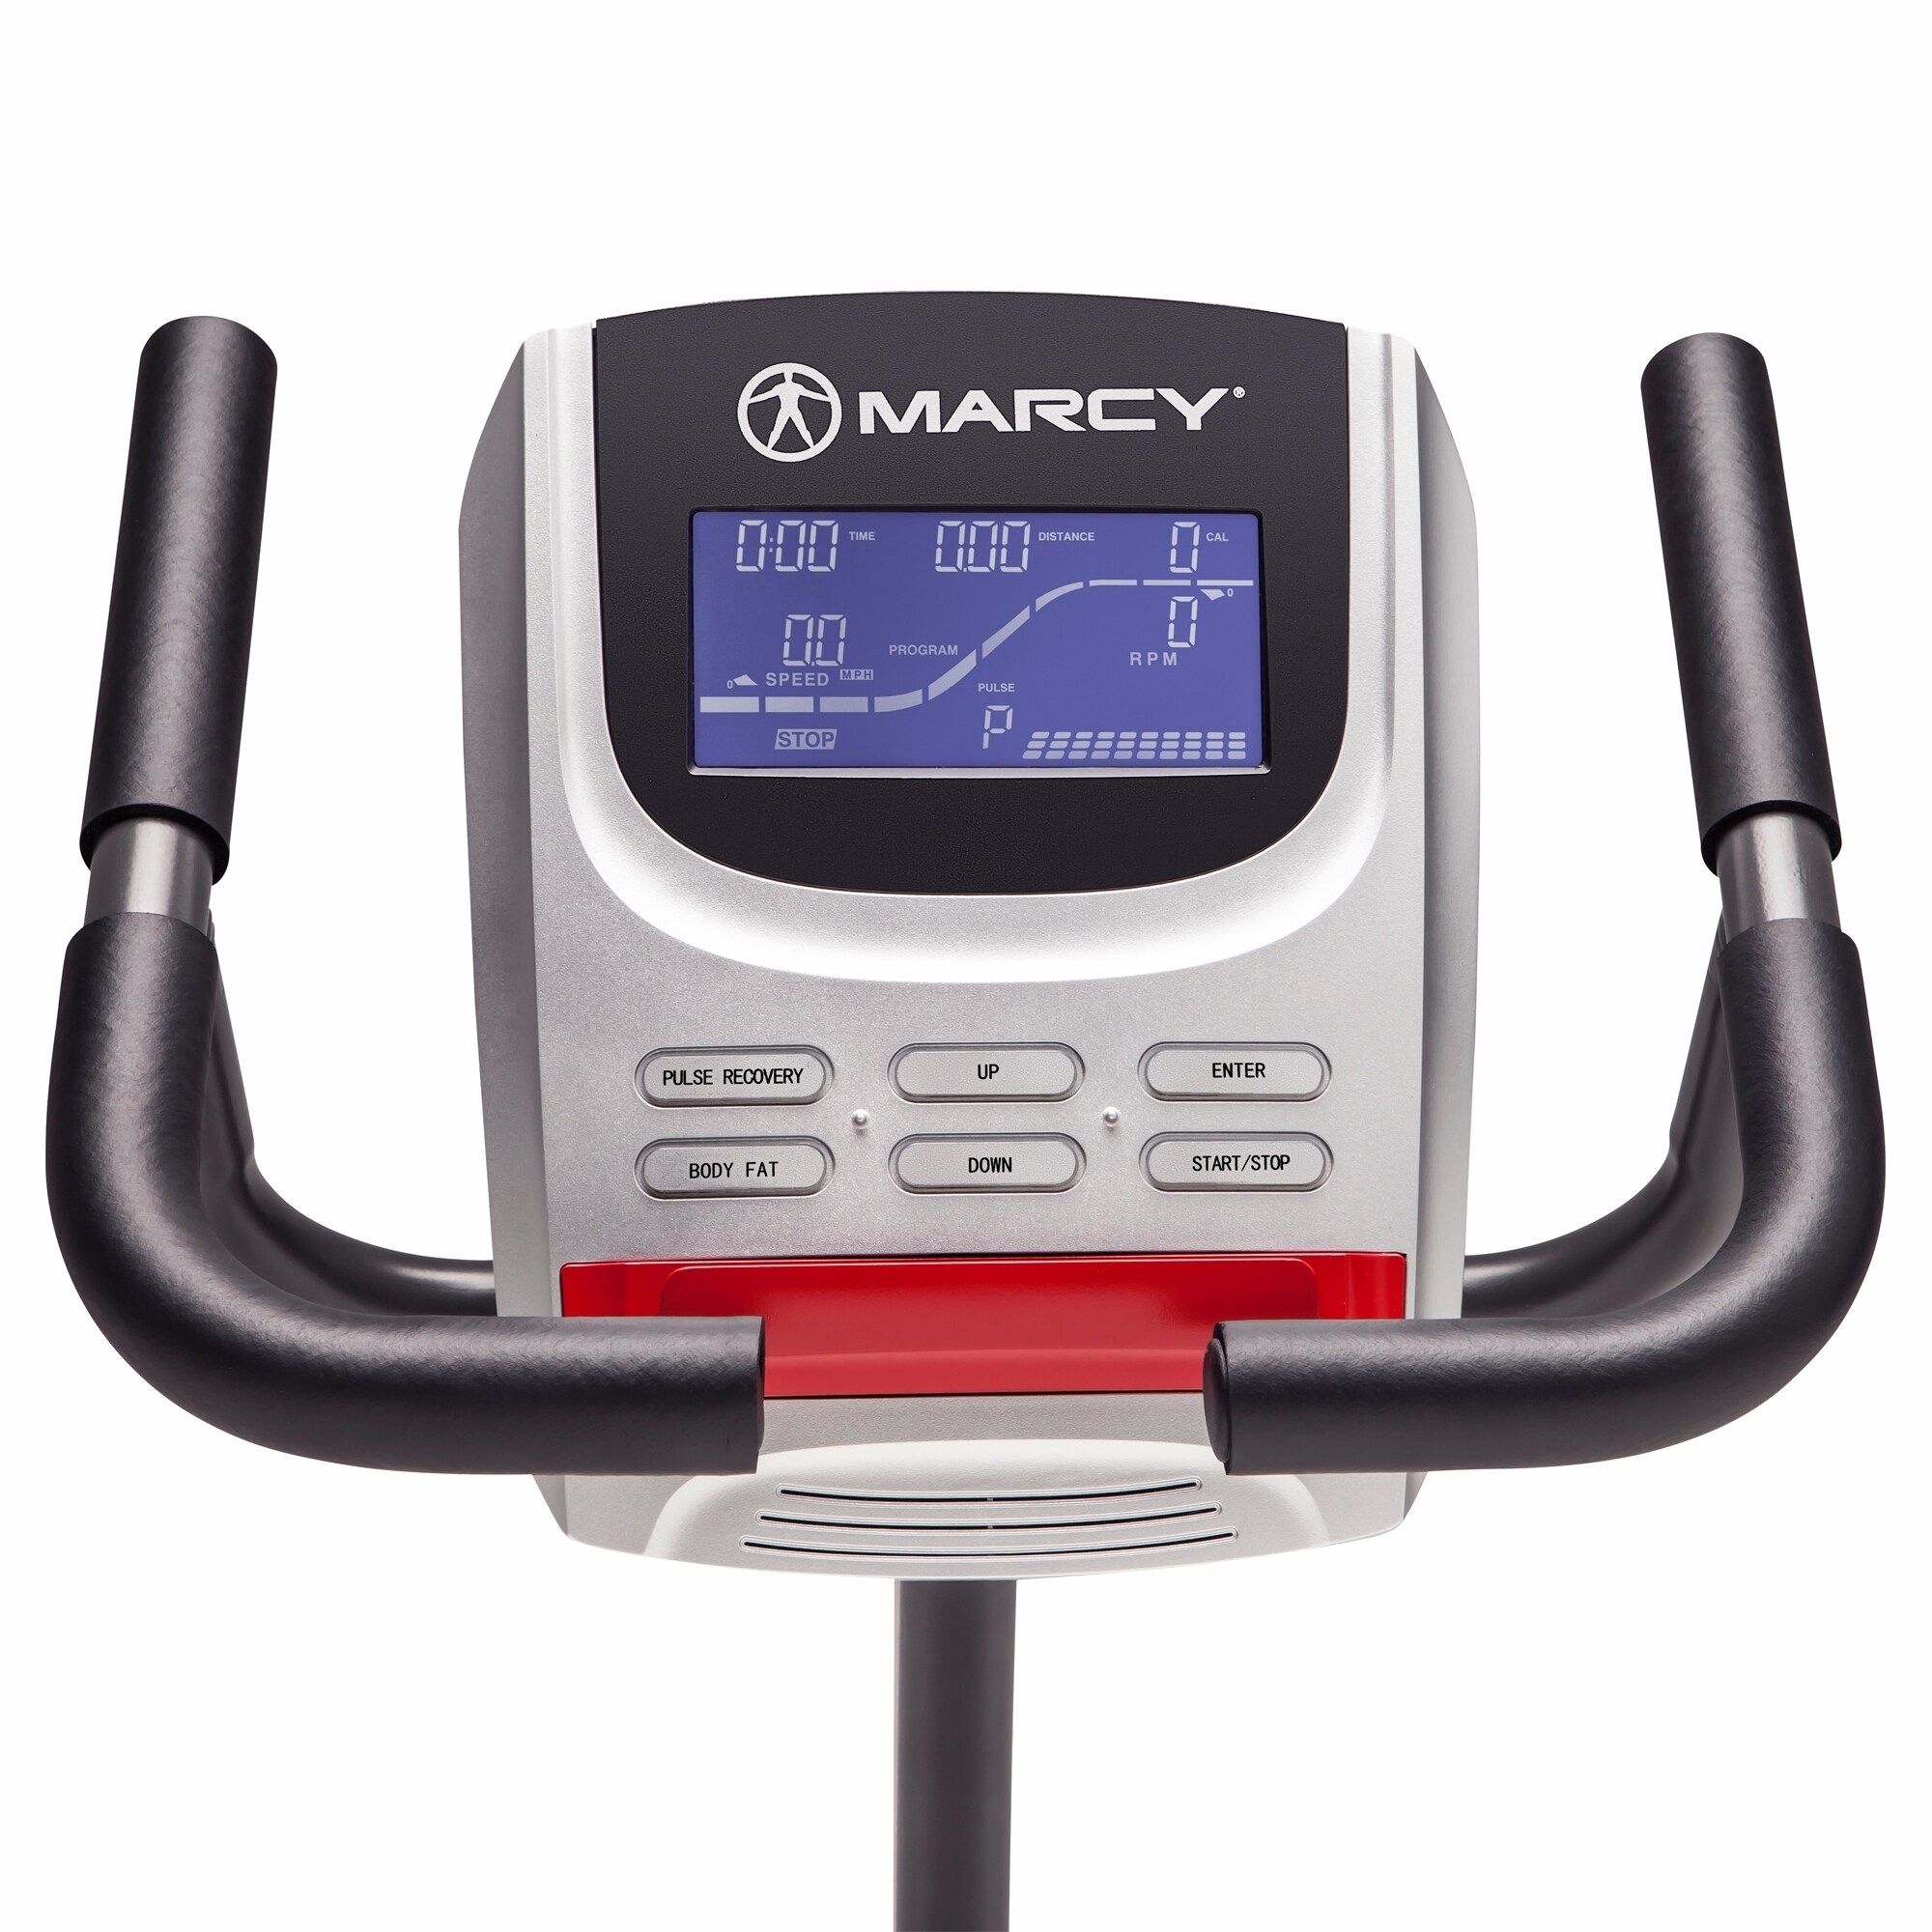 Marcy Regenerating Magnetic Recumbent Exercise Bike ME-706 - image 3 of 5